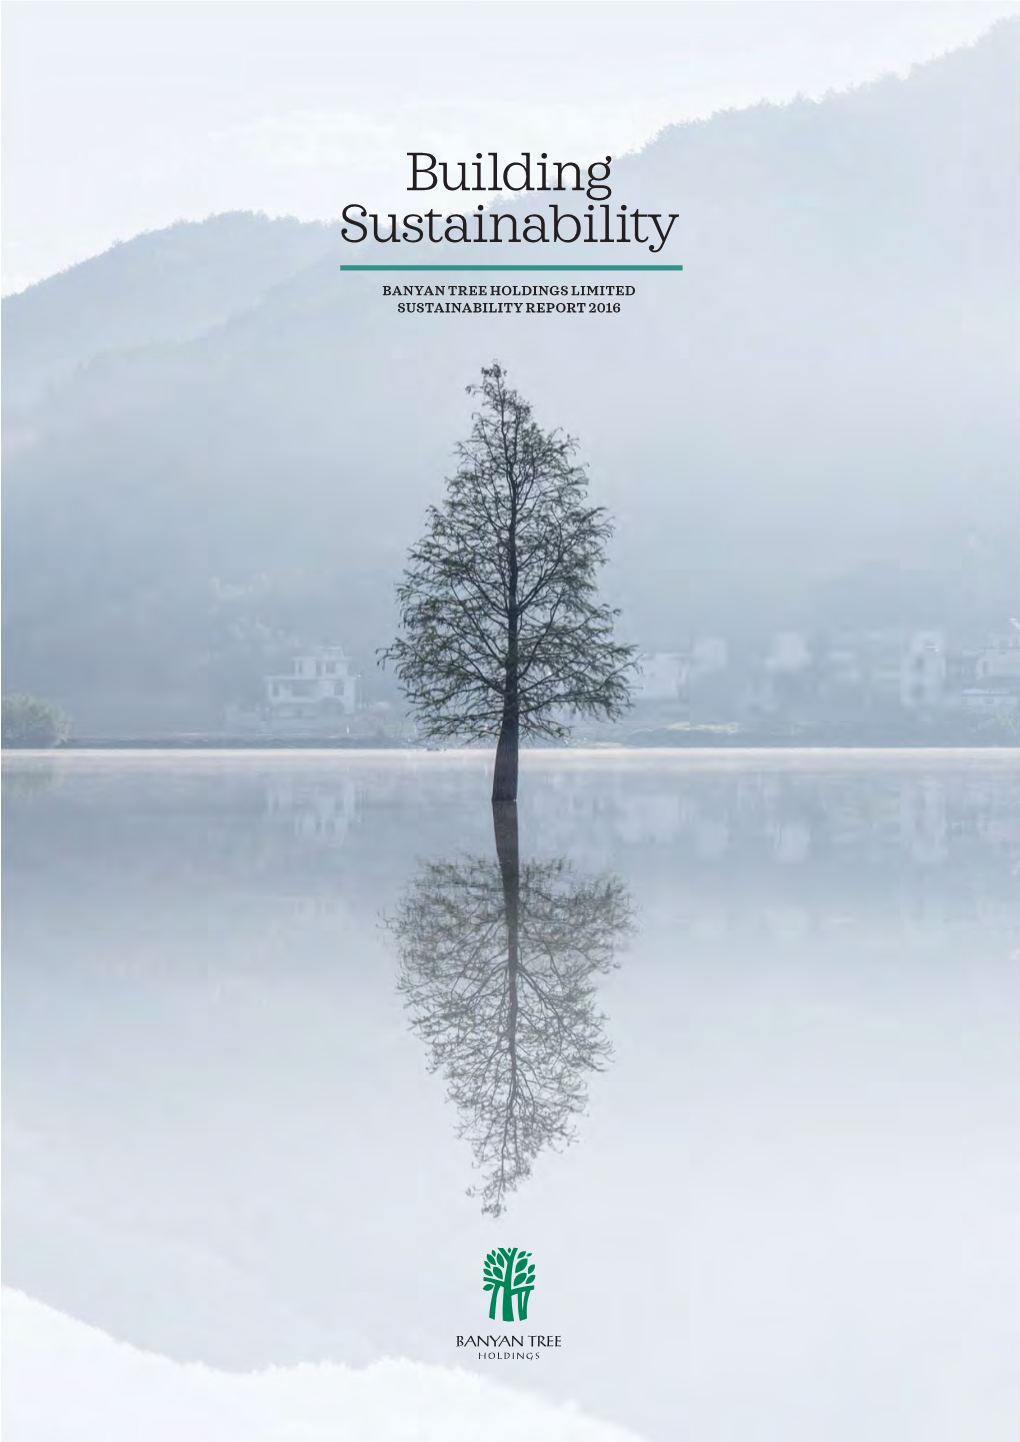 SUSTAINABILITY REPORT 2016 Banyan Tree Holdings Limited Sustainability Report 2016 Building Sustainability 1